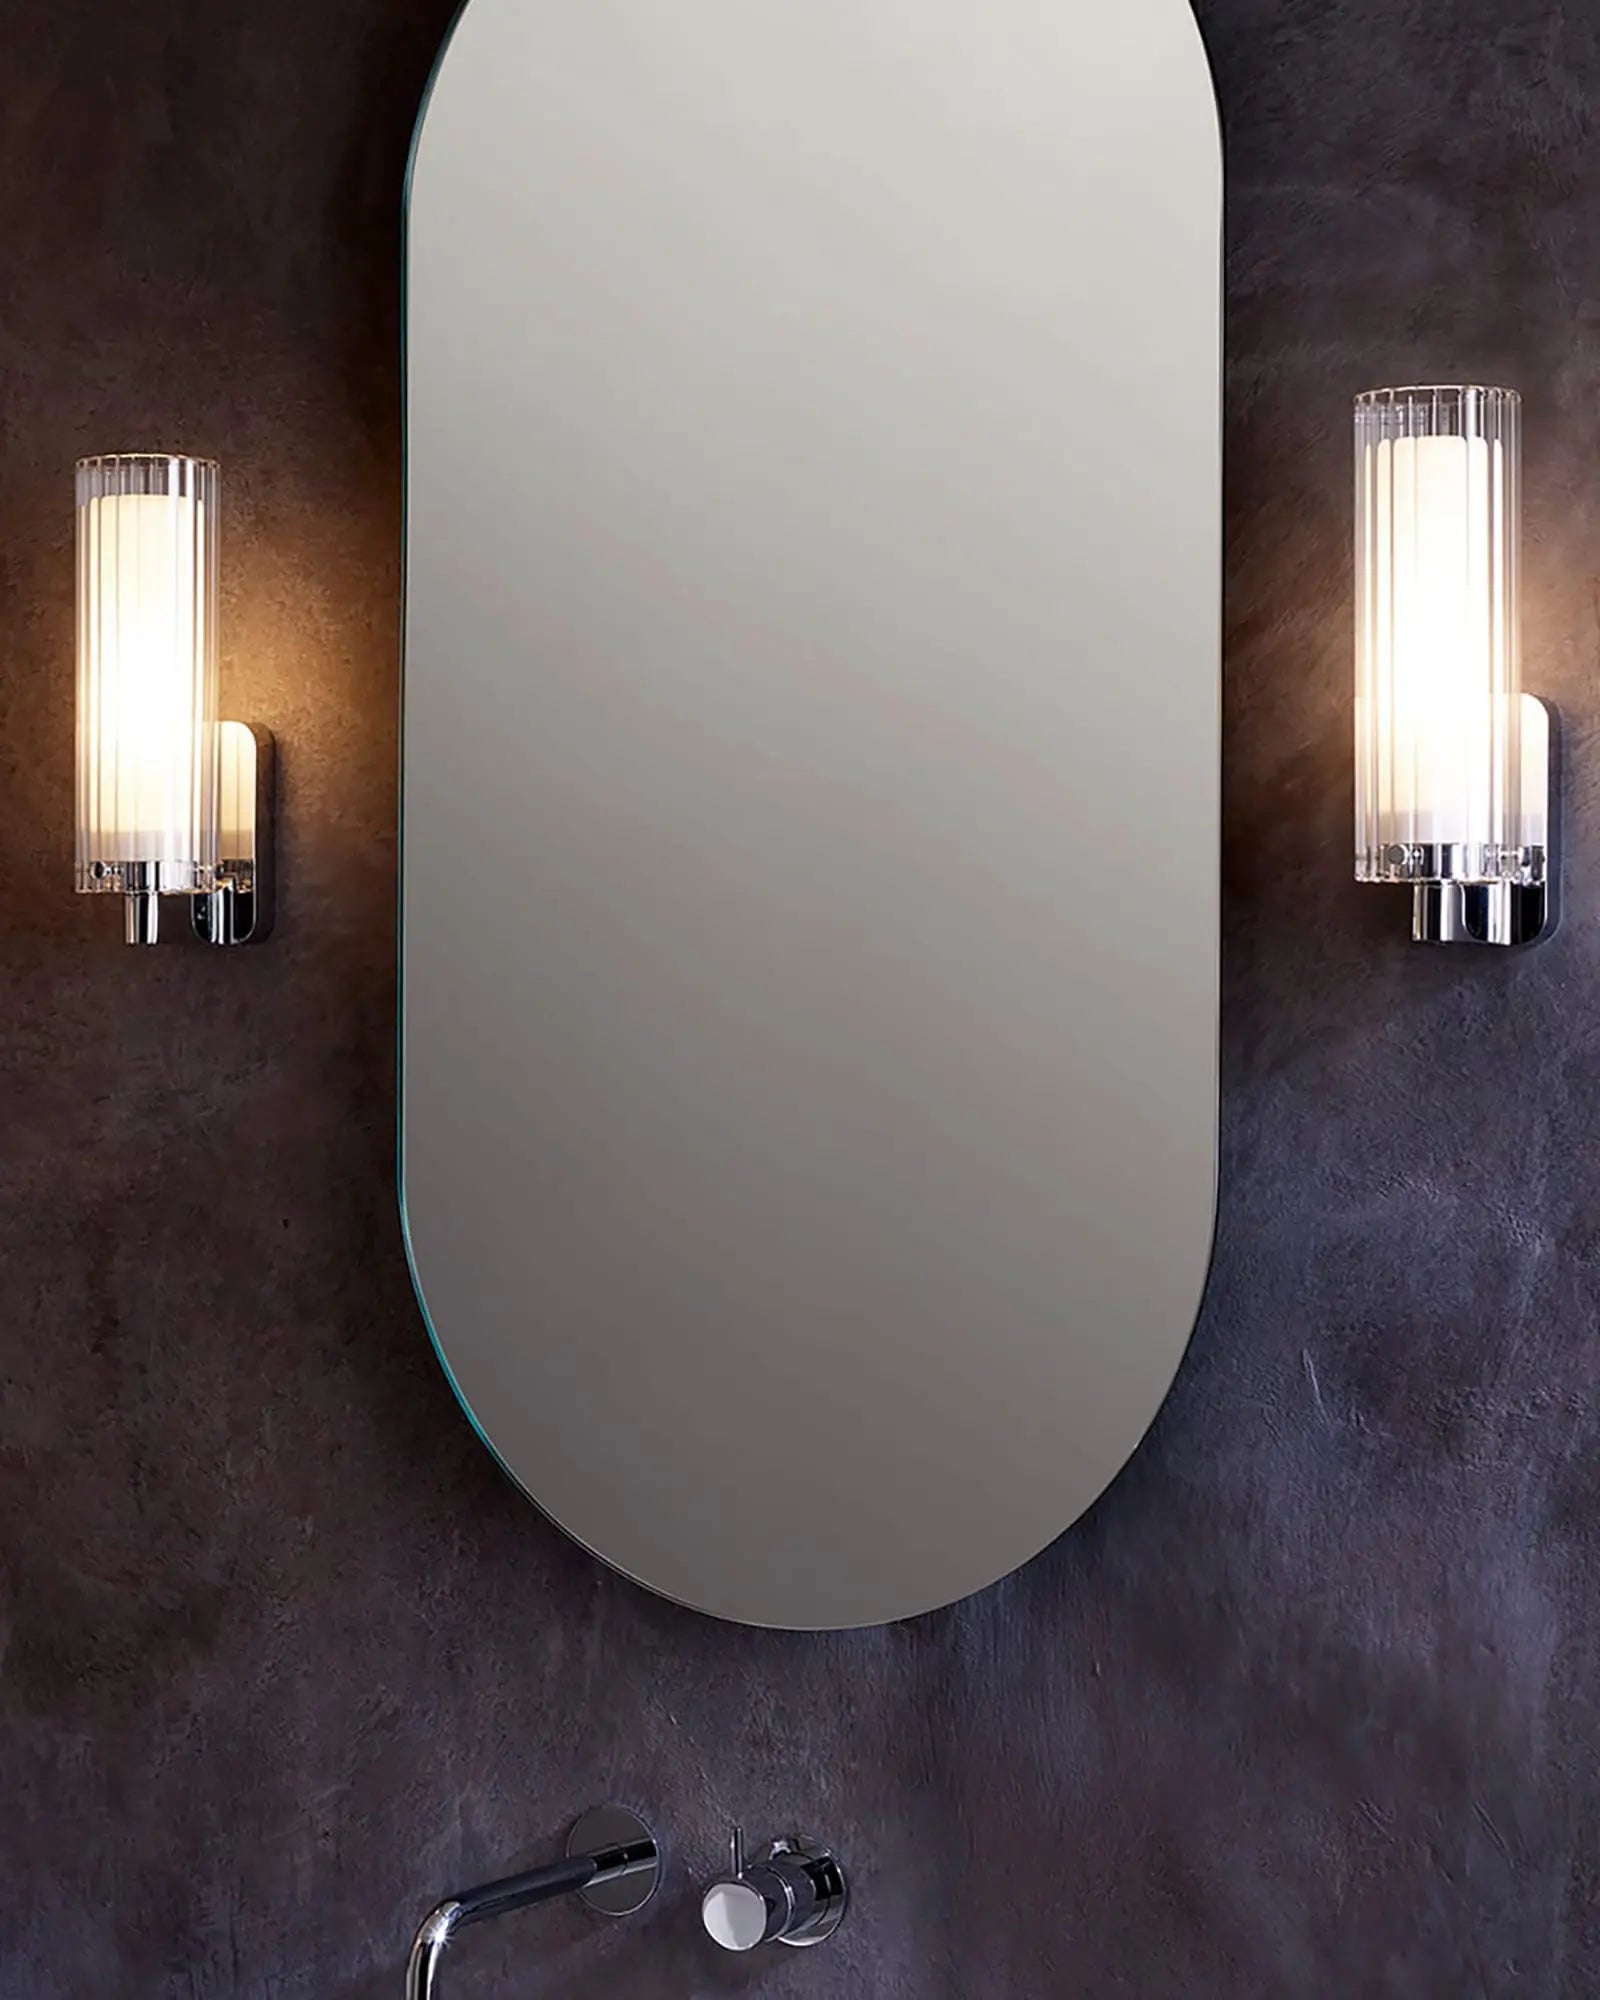 Ottavino ribbed glass and chrome bathroom wall light mirror's sides